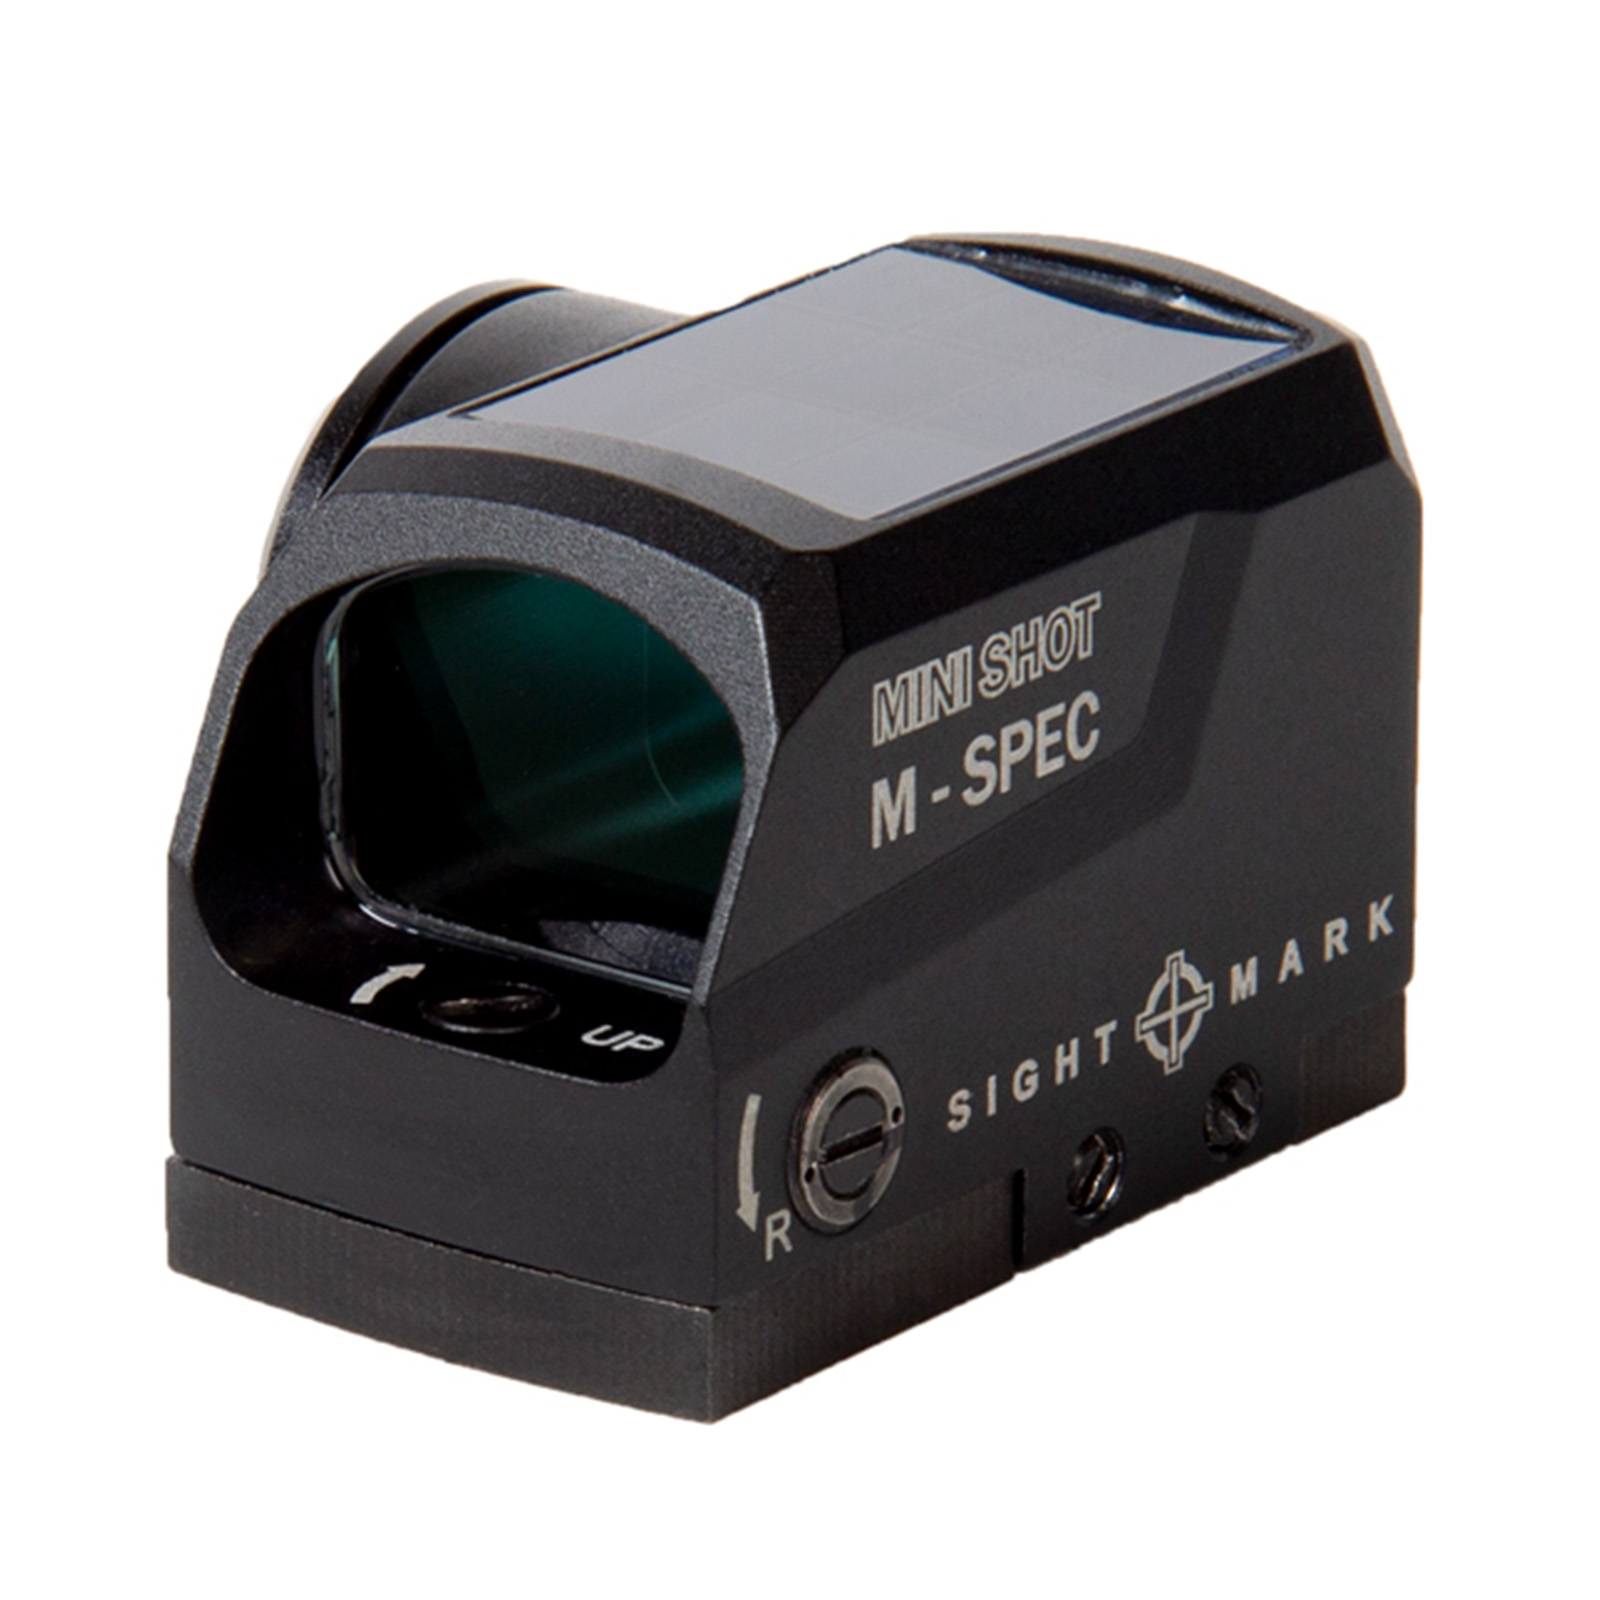 SIGHTMARK Mini Shot M-Spec M3 Solar Rotpunktvisier von Sightmark